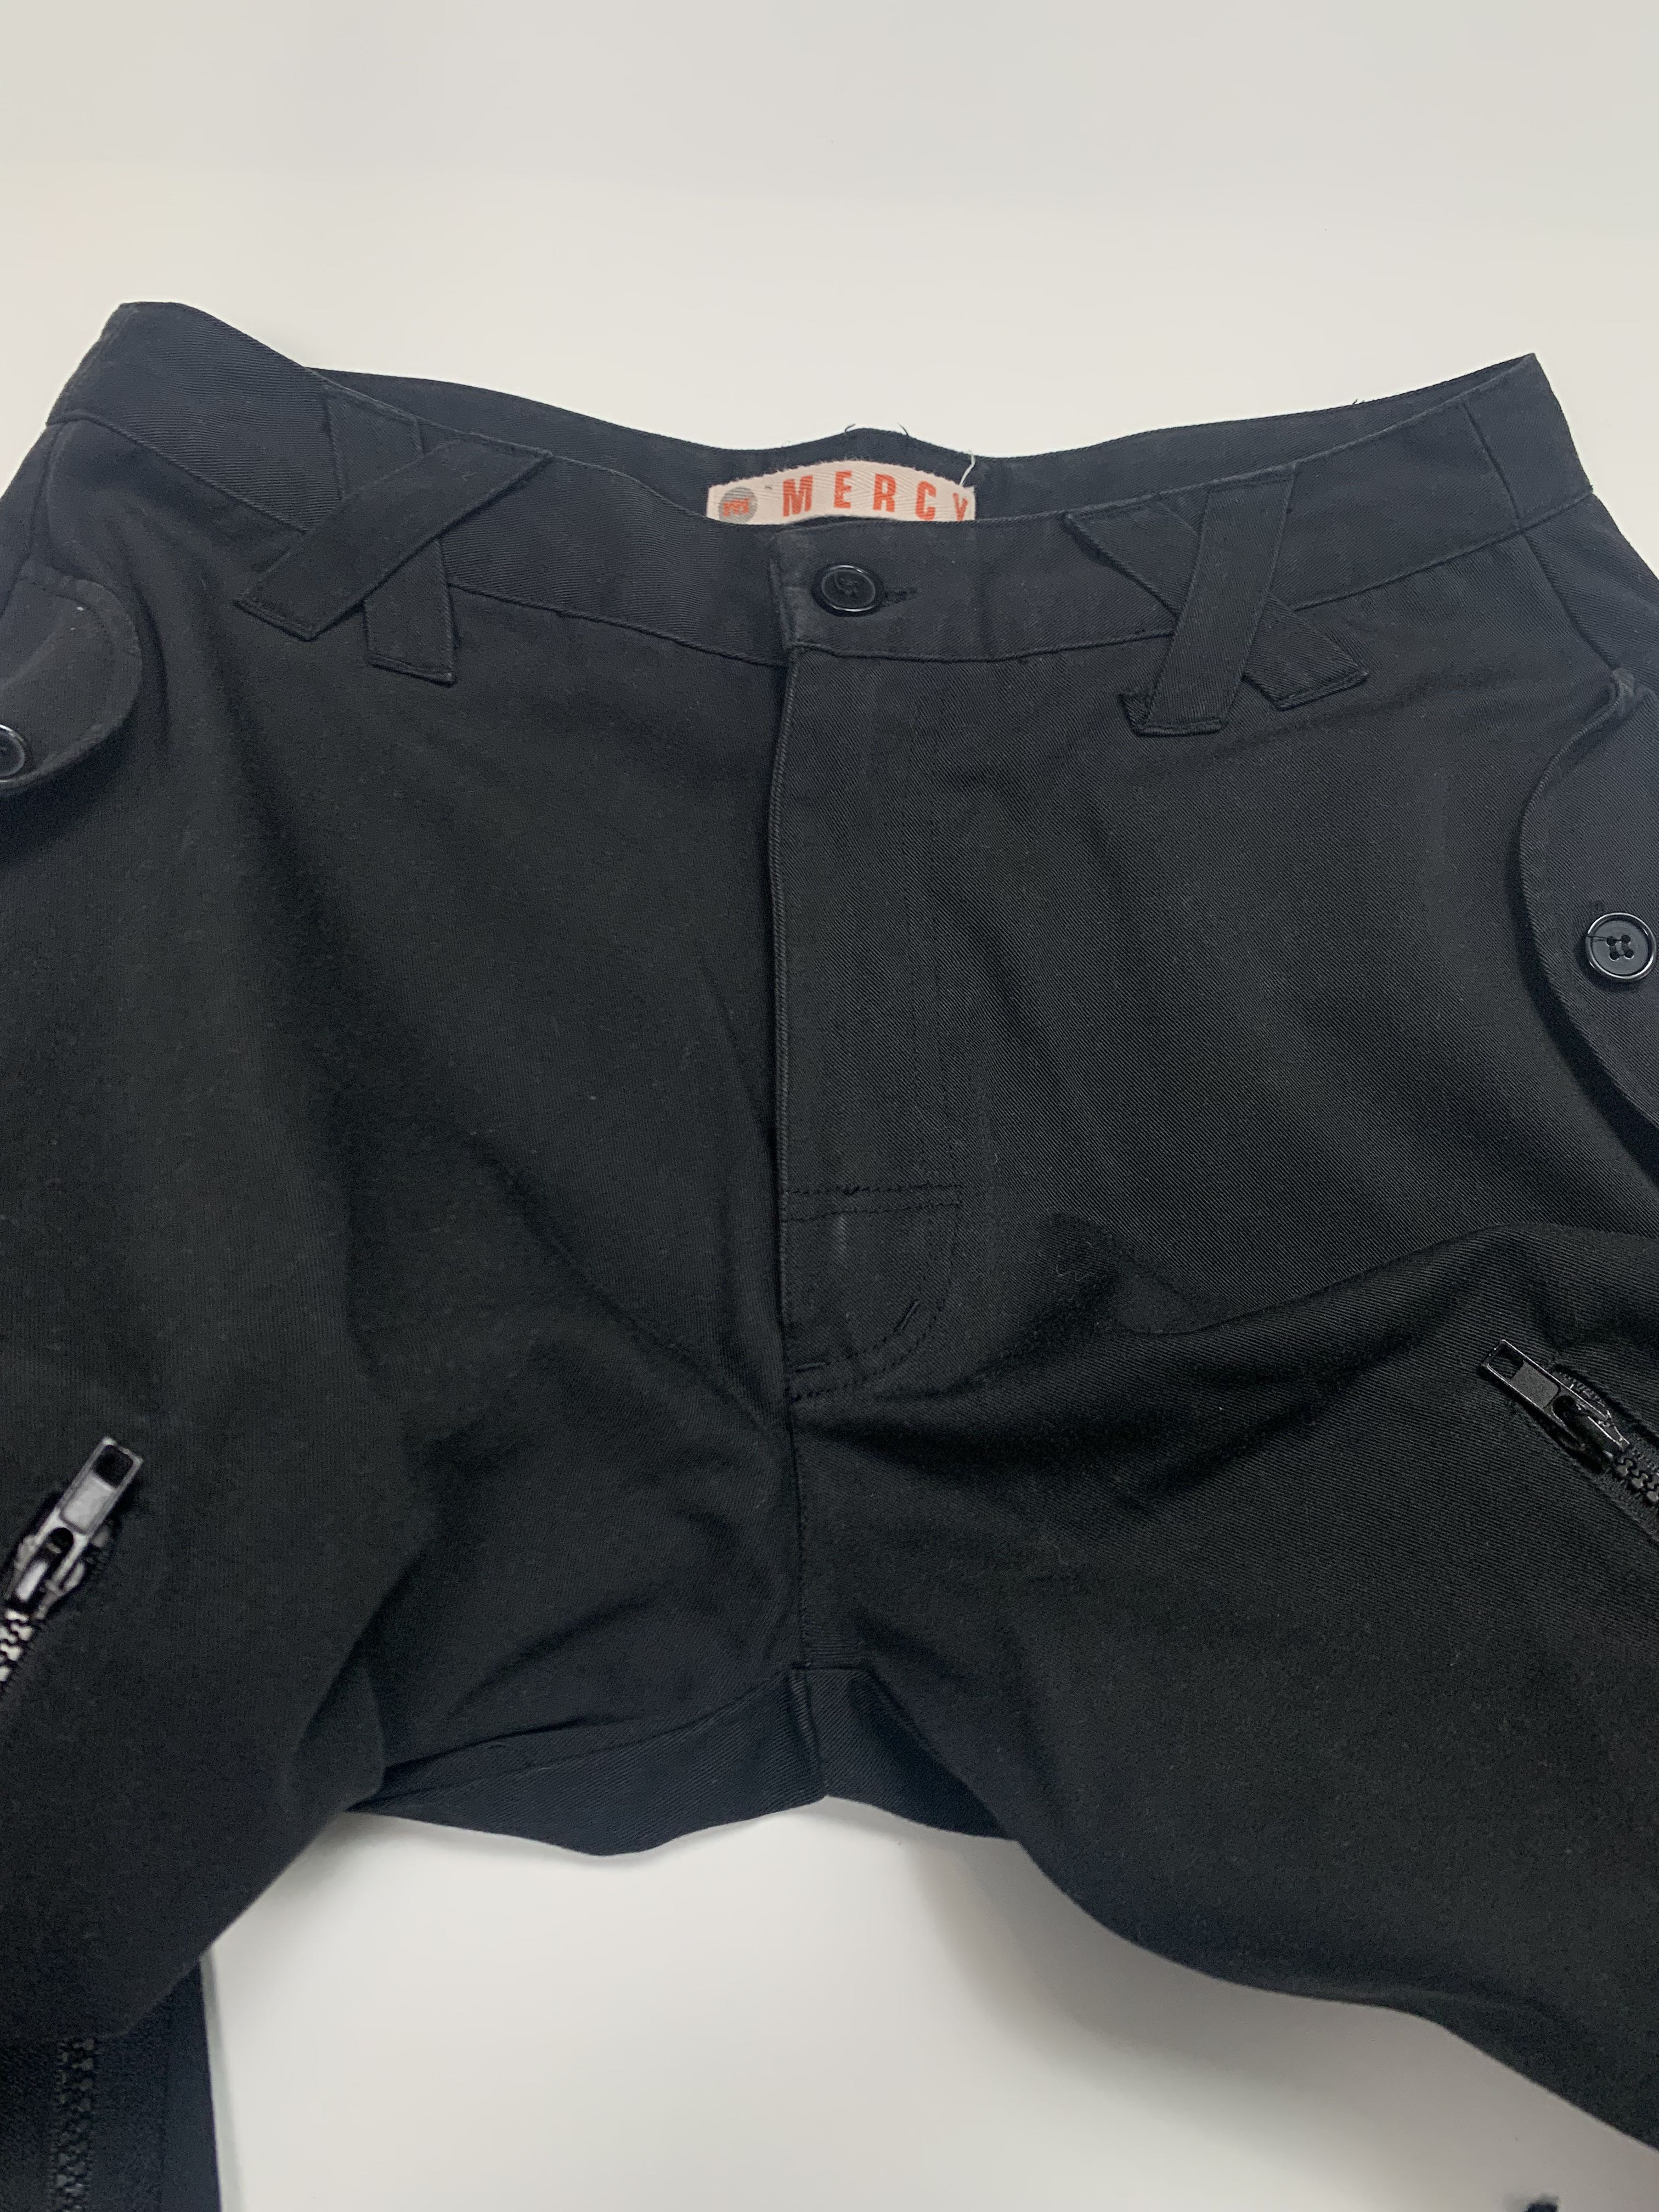 VTG Mercy Men Pants Women Japanese Style Pants Techwear Lace Up Pants Size M Y2K Pants Hypebeast Pants - 4